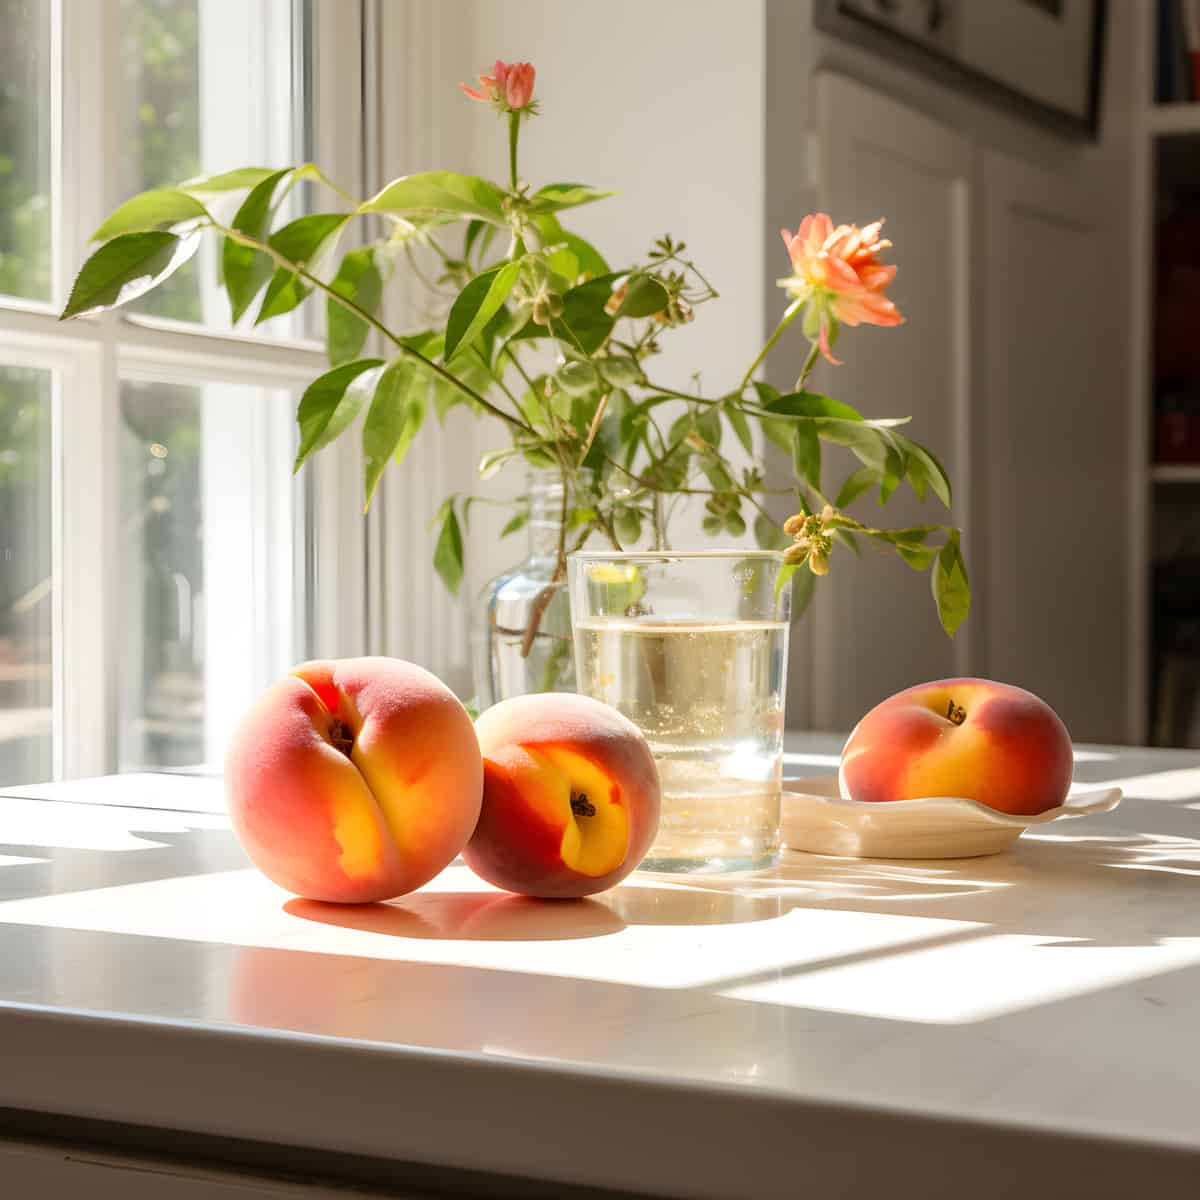 Texas Peach on a kitchen counter